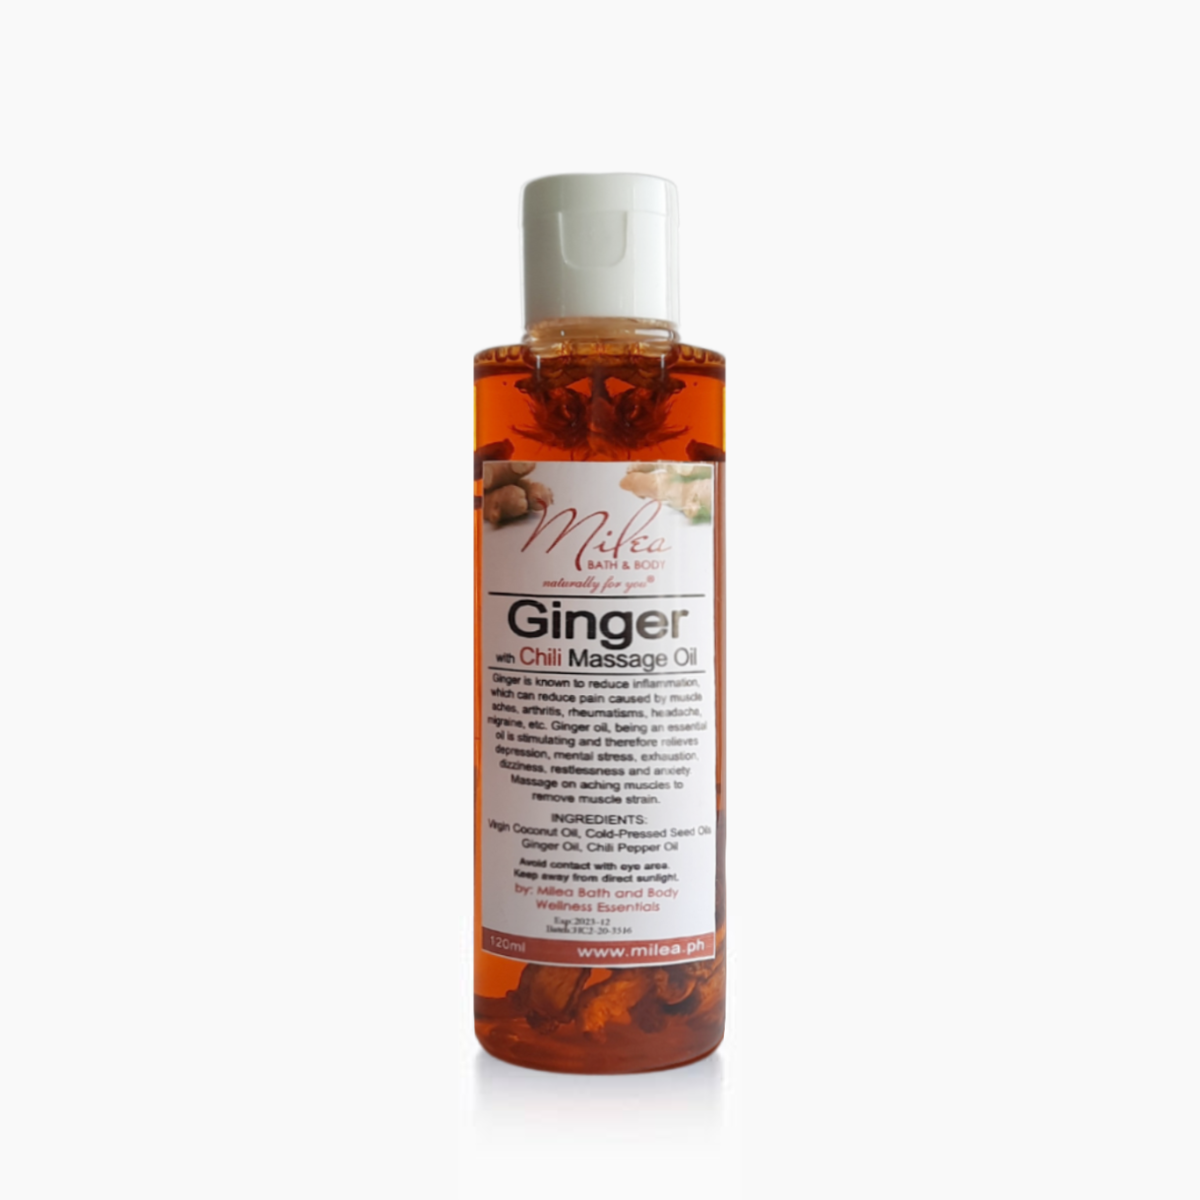 Ginger Chili Massage Oil